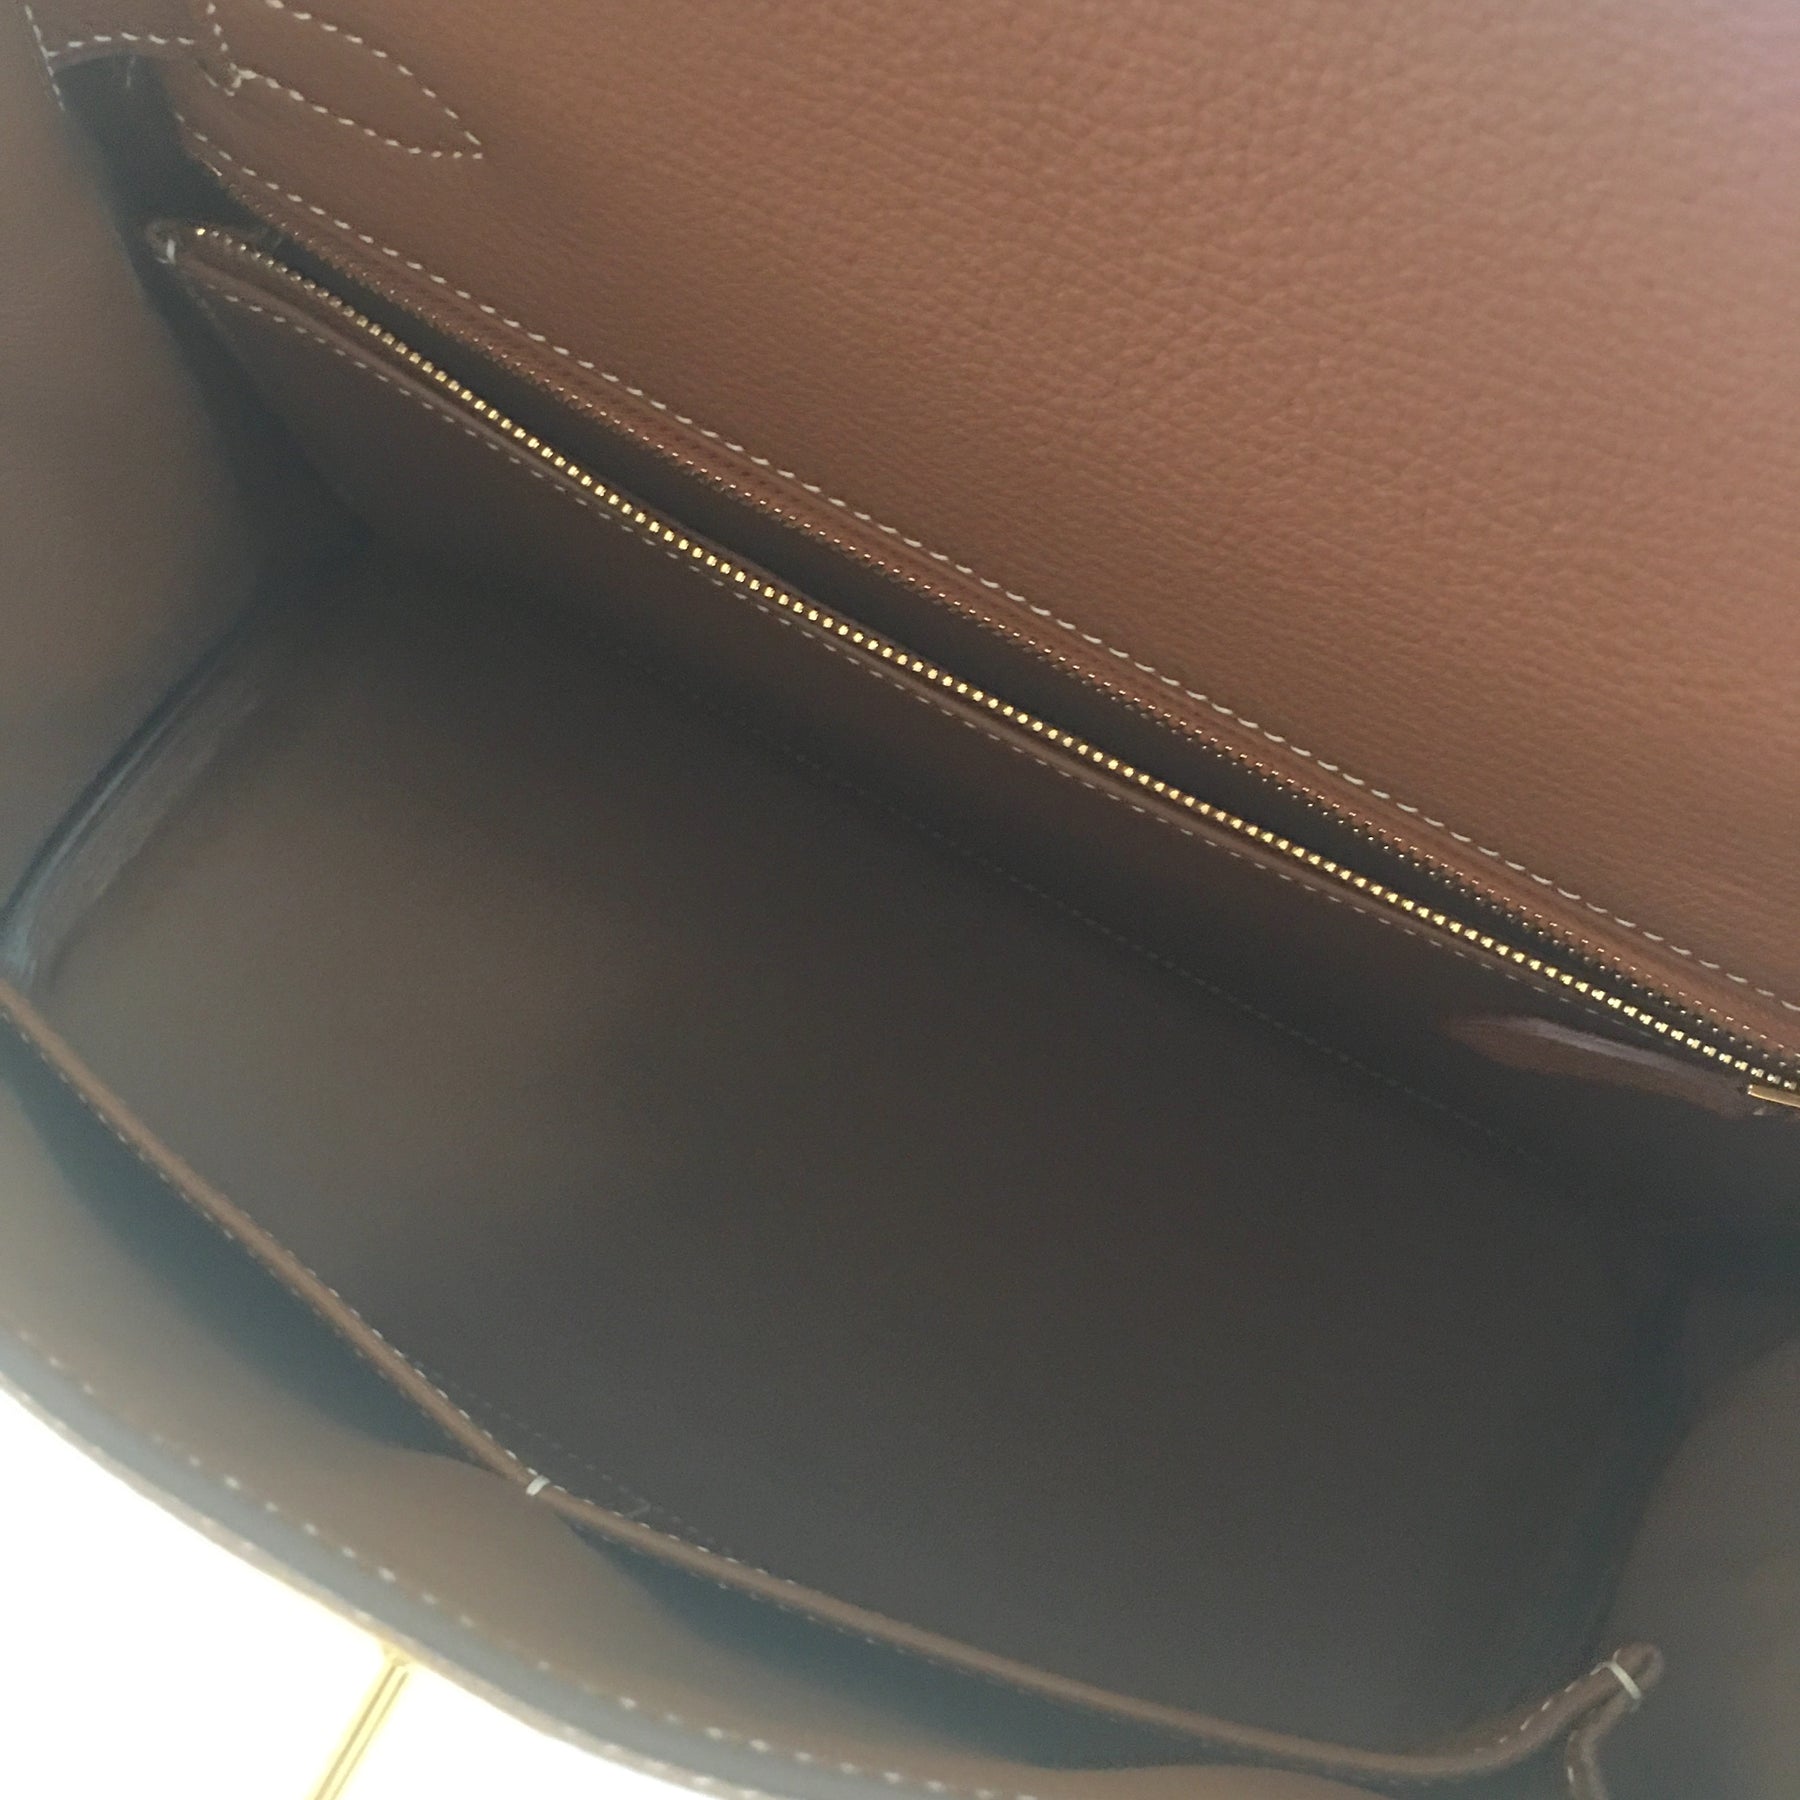 Kelly 25 leather handbag Hermès Blue in Leather - 33088689